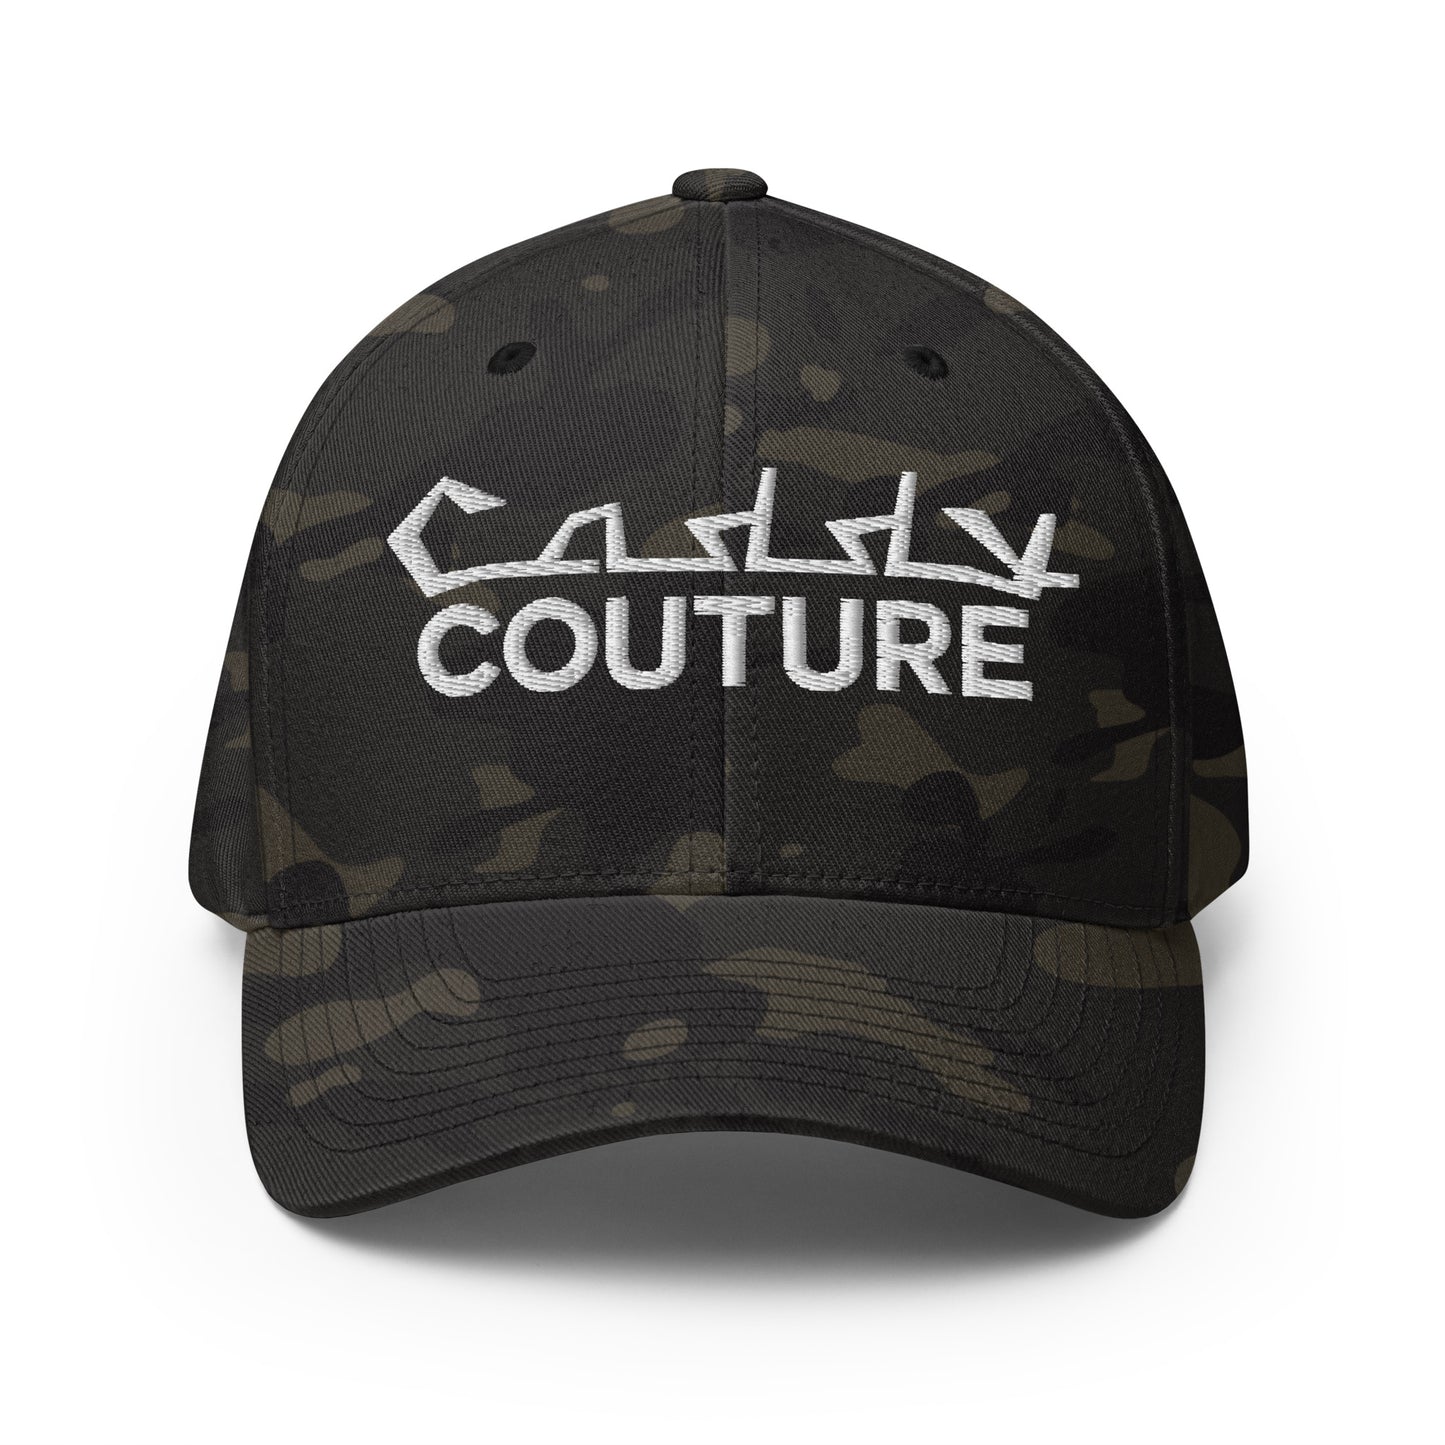 Caddy Couture Structured Twill Cap - Multicam